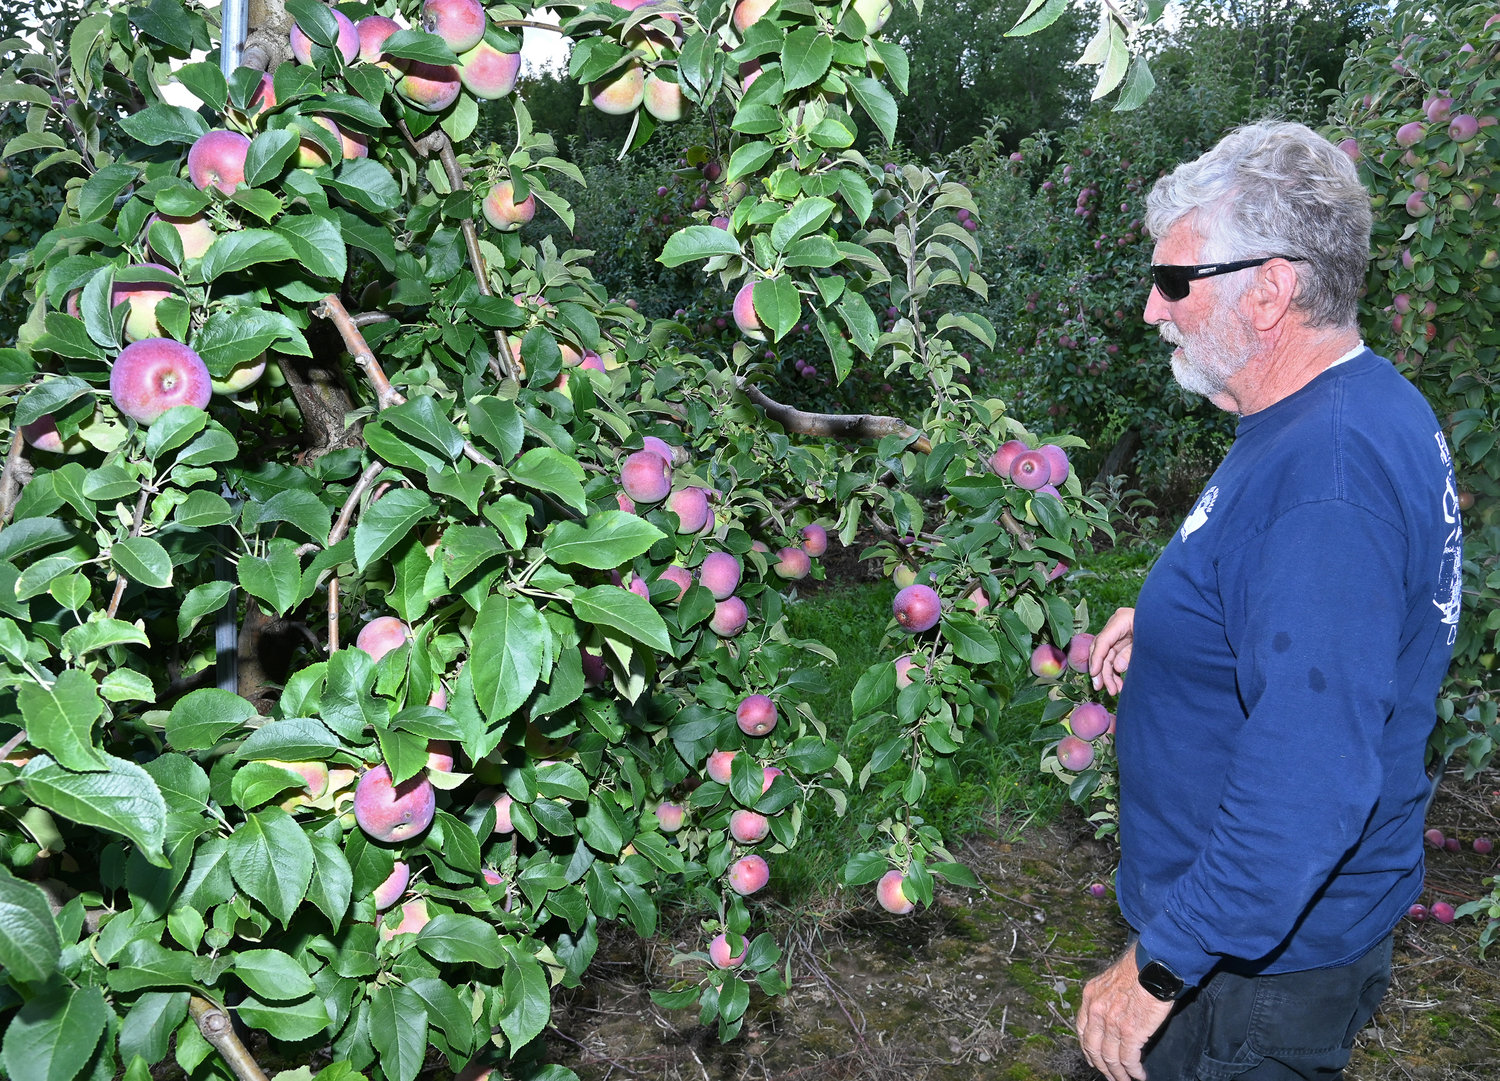 Matthew Critz in his orchard in Cazenovia on Wednesday, Aug. 31.